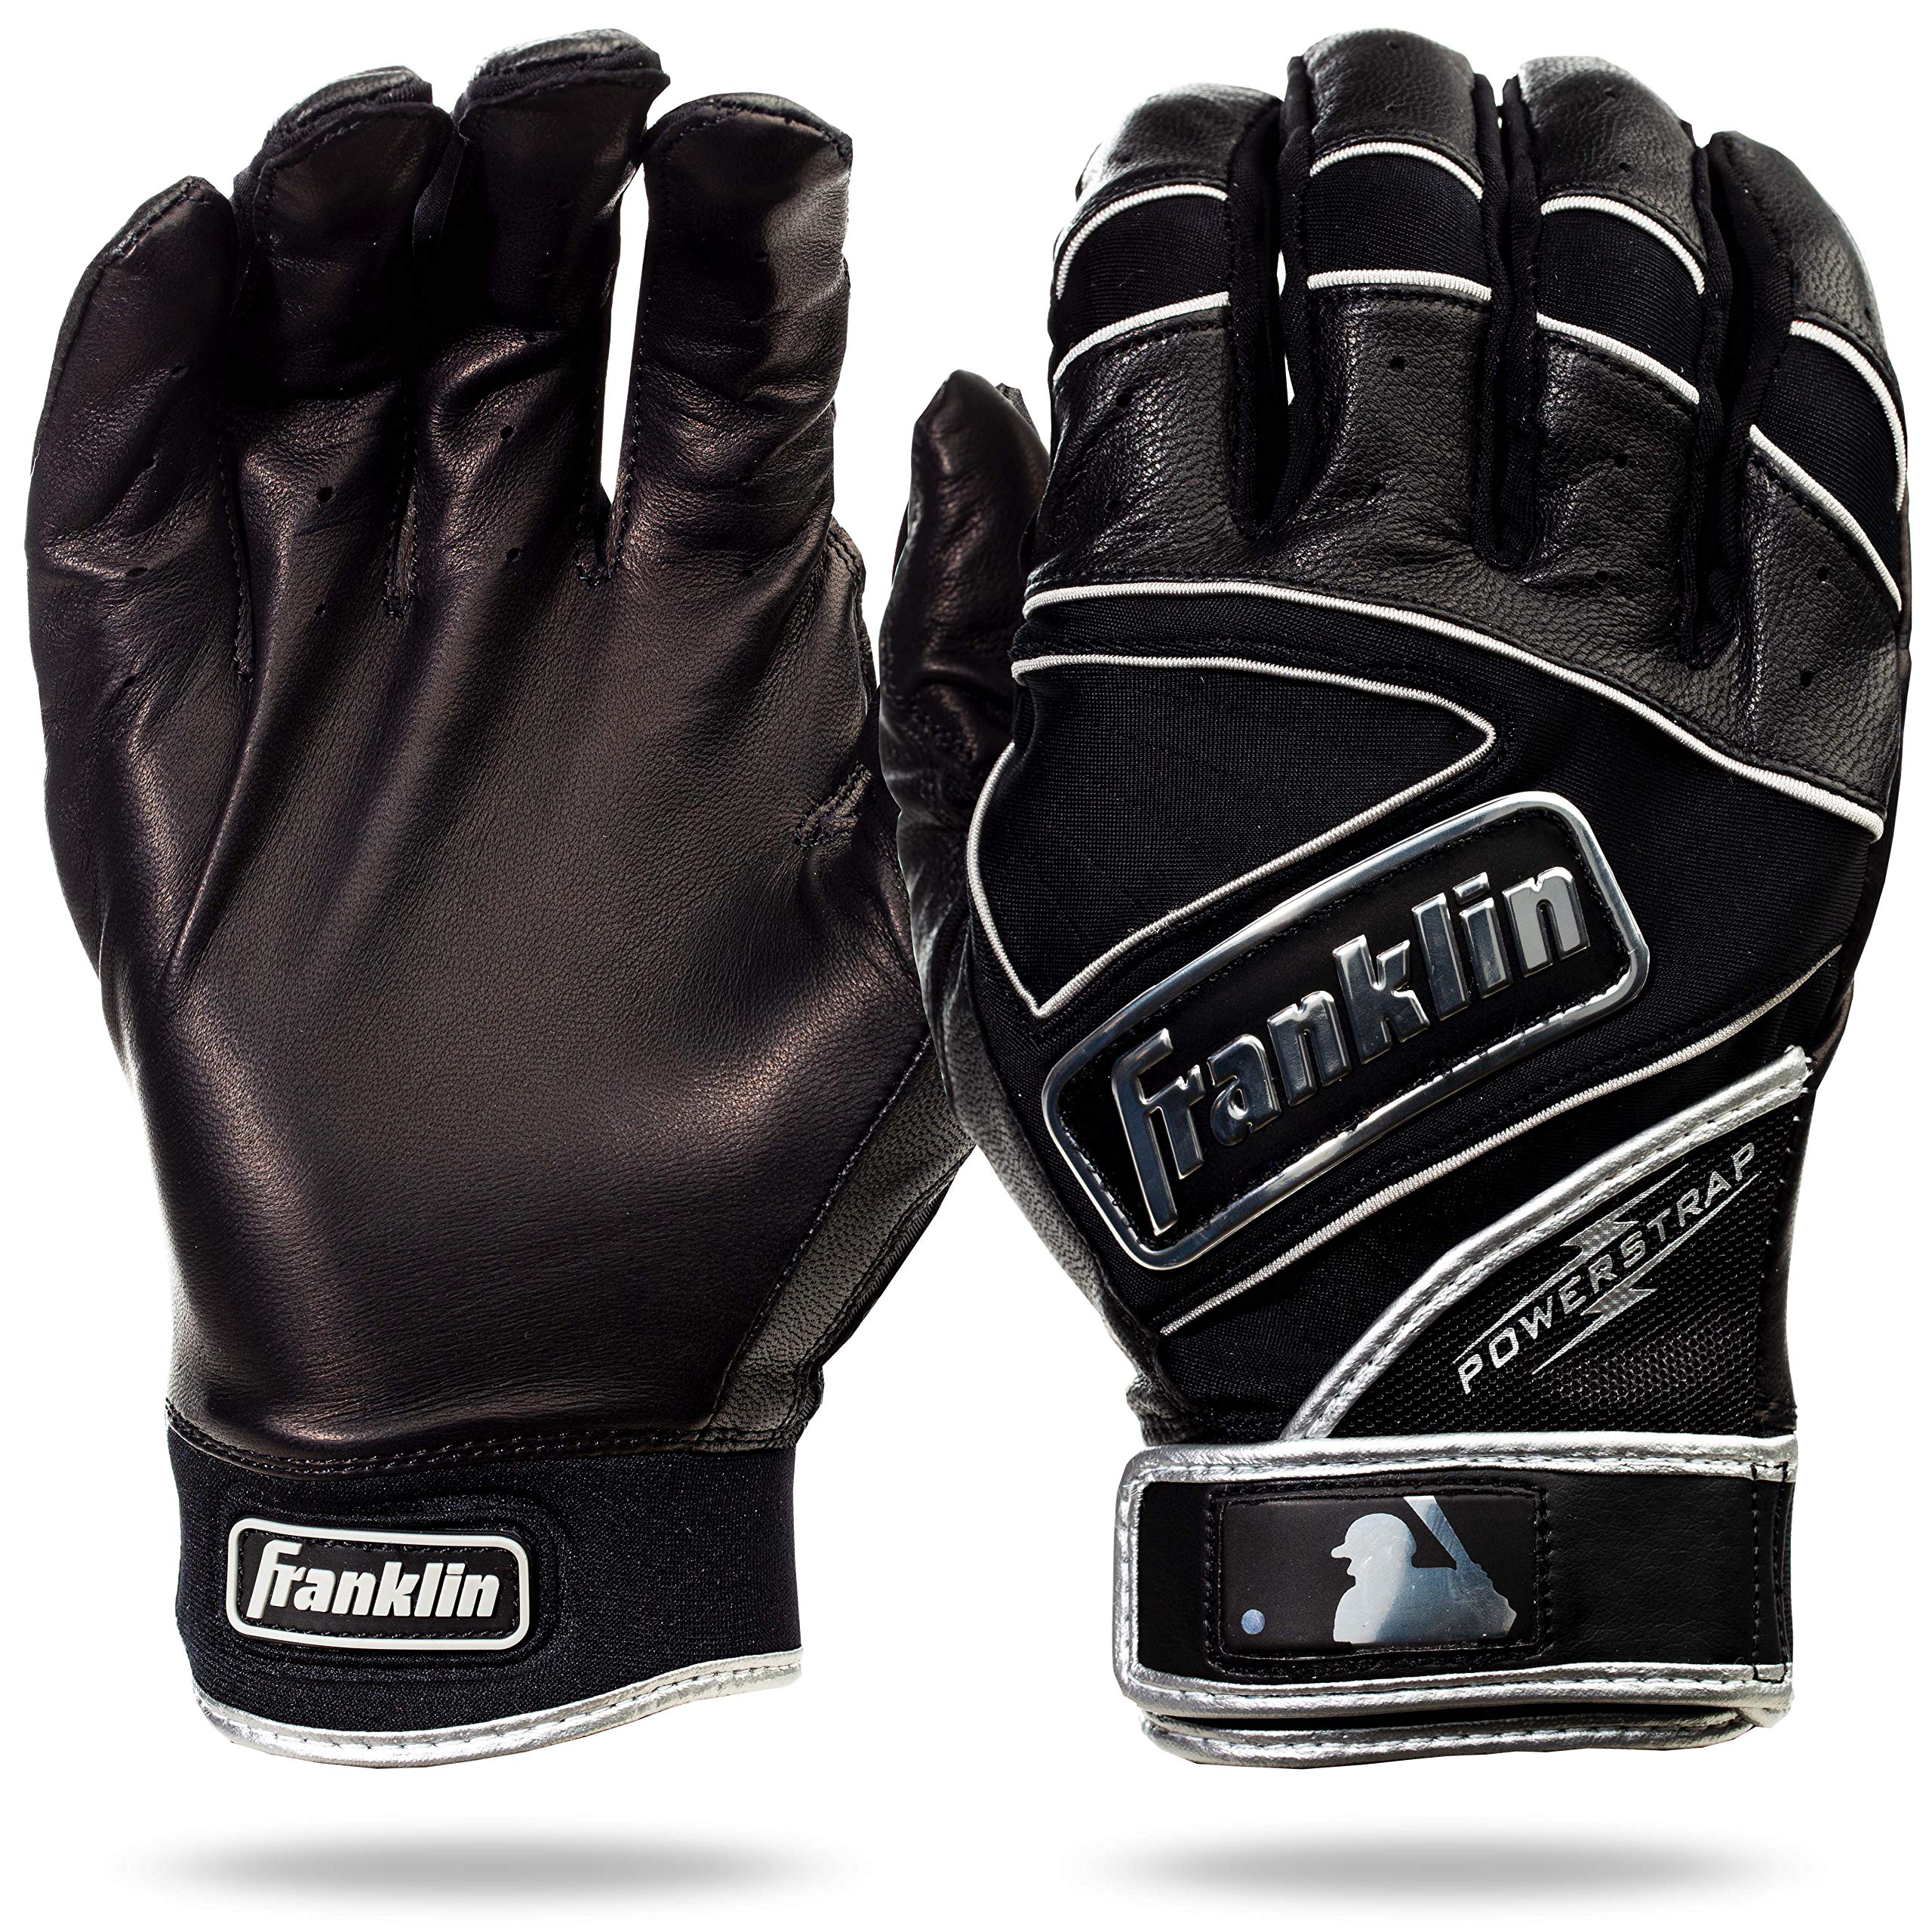 Franklin Sports Chrome Powerstrapa Batting Gloves - Black - Adult Large